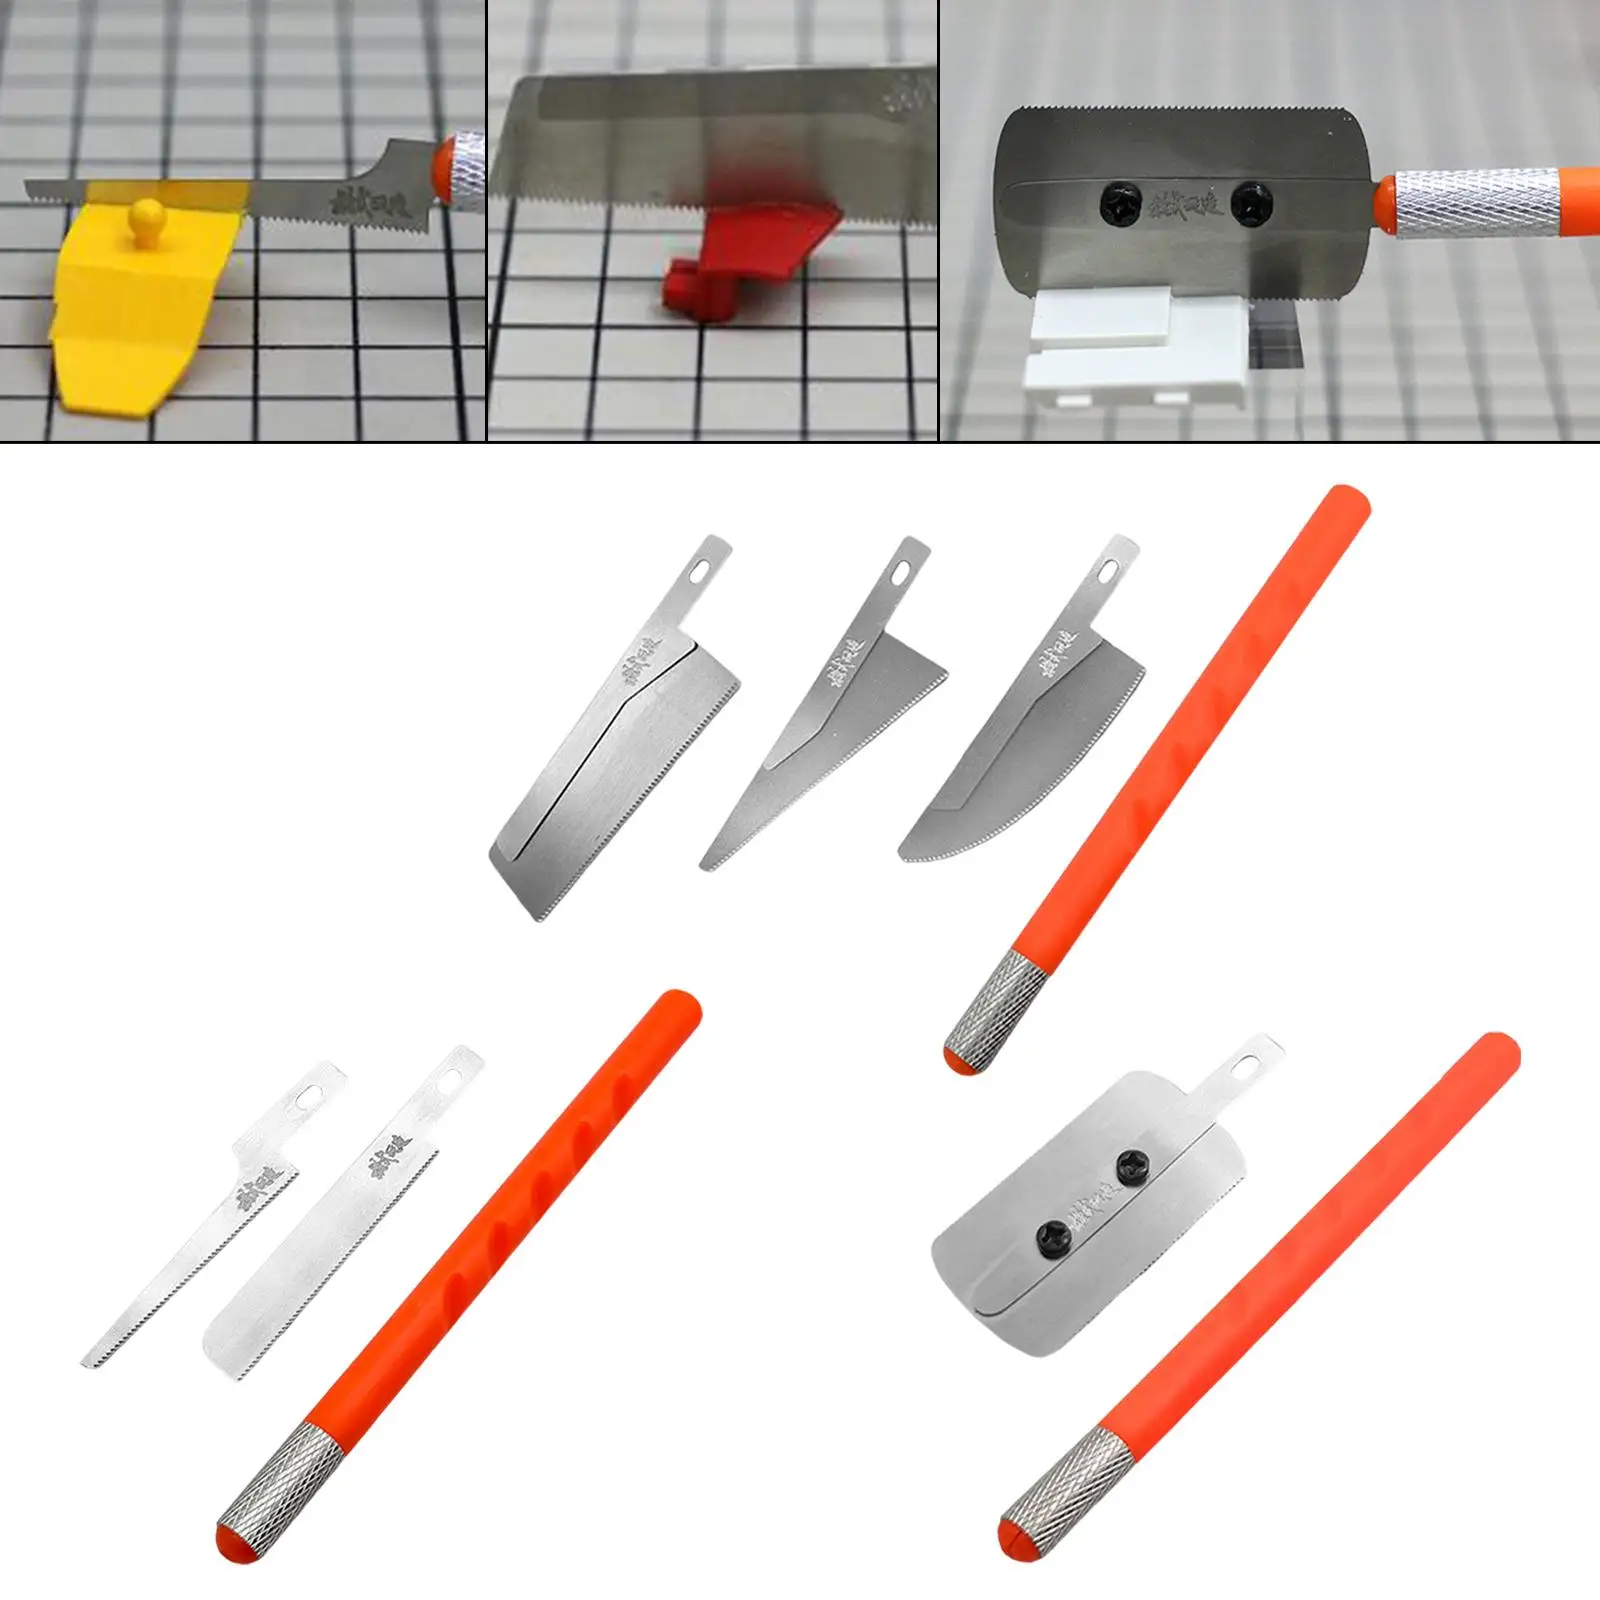 Model Making Tool DIY Accessories Hobby Tools for Repairing Model Building